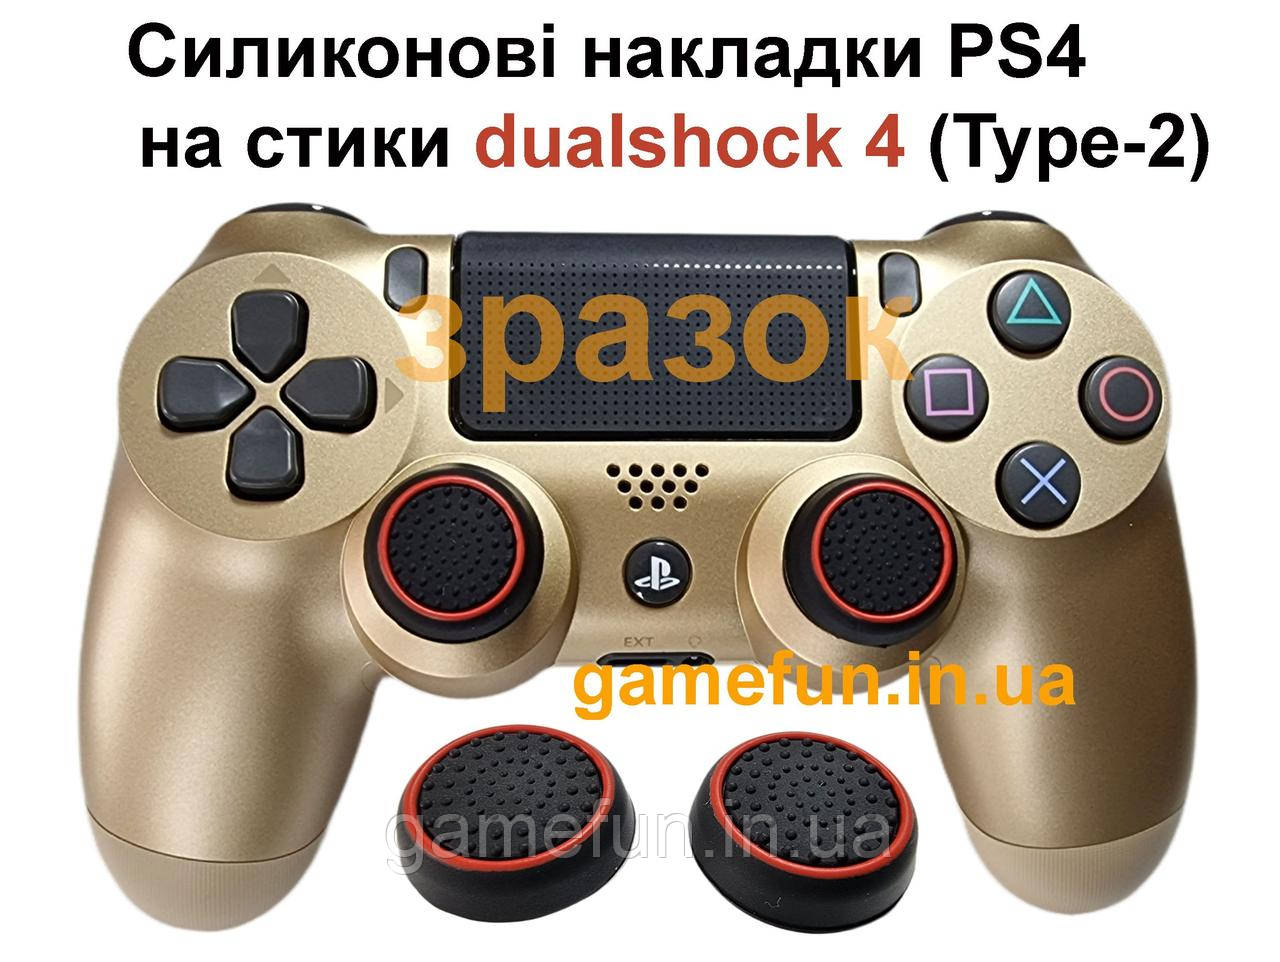 Cиликонові накладки PS4 на стики dualshock 4 (Type-2)